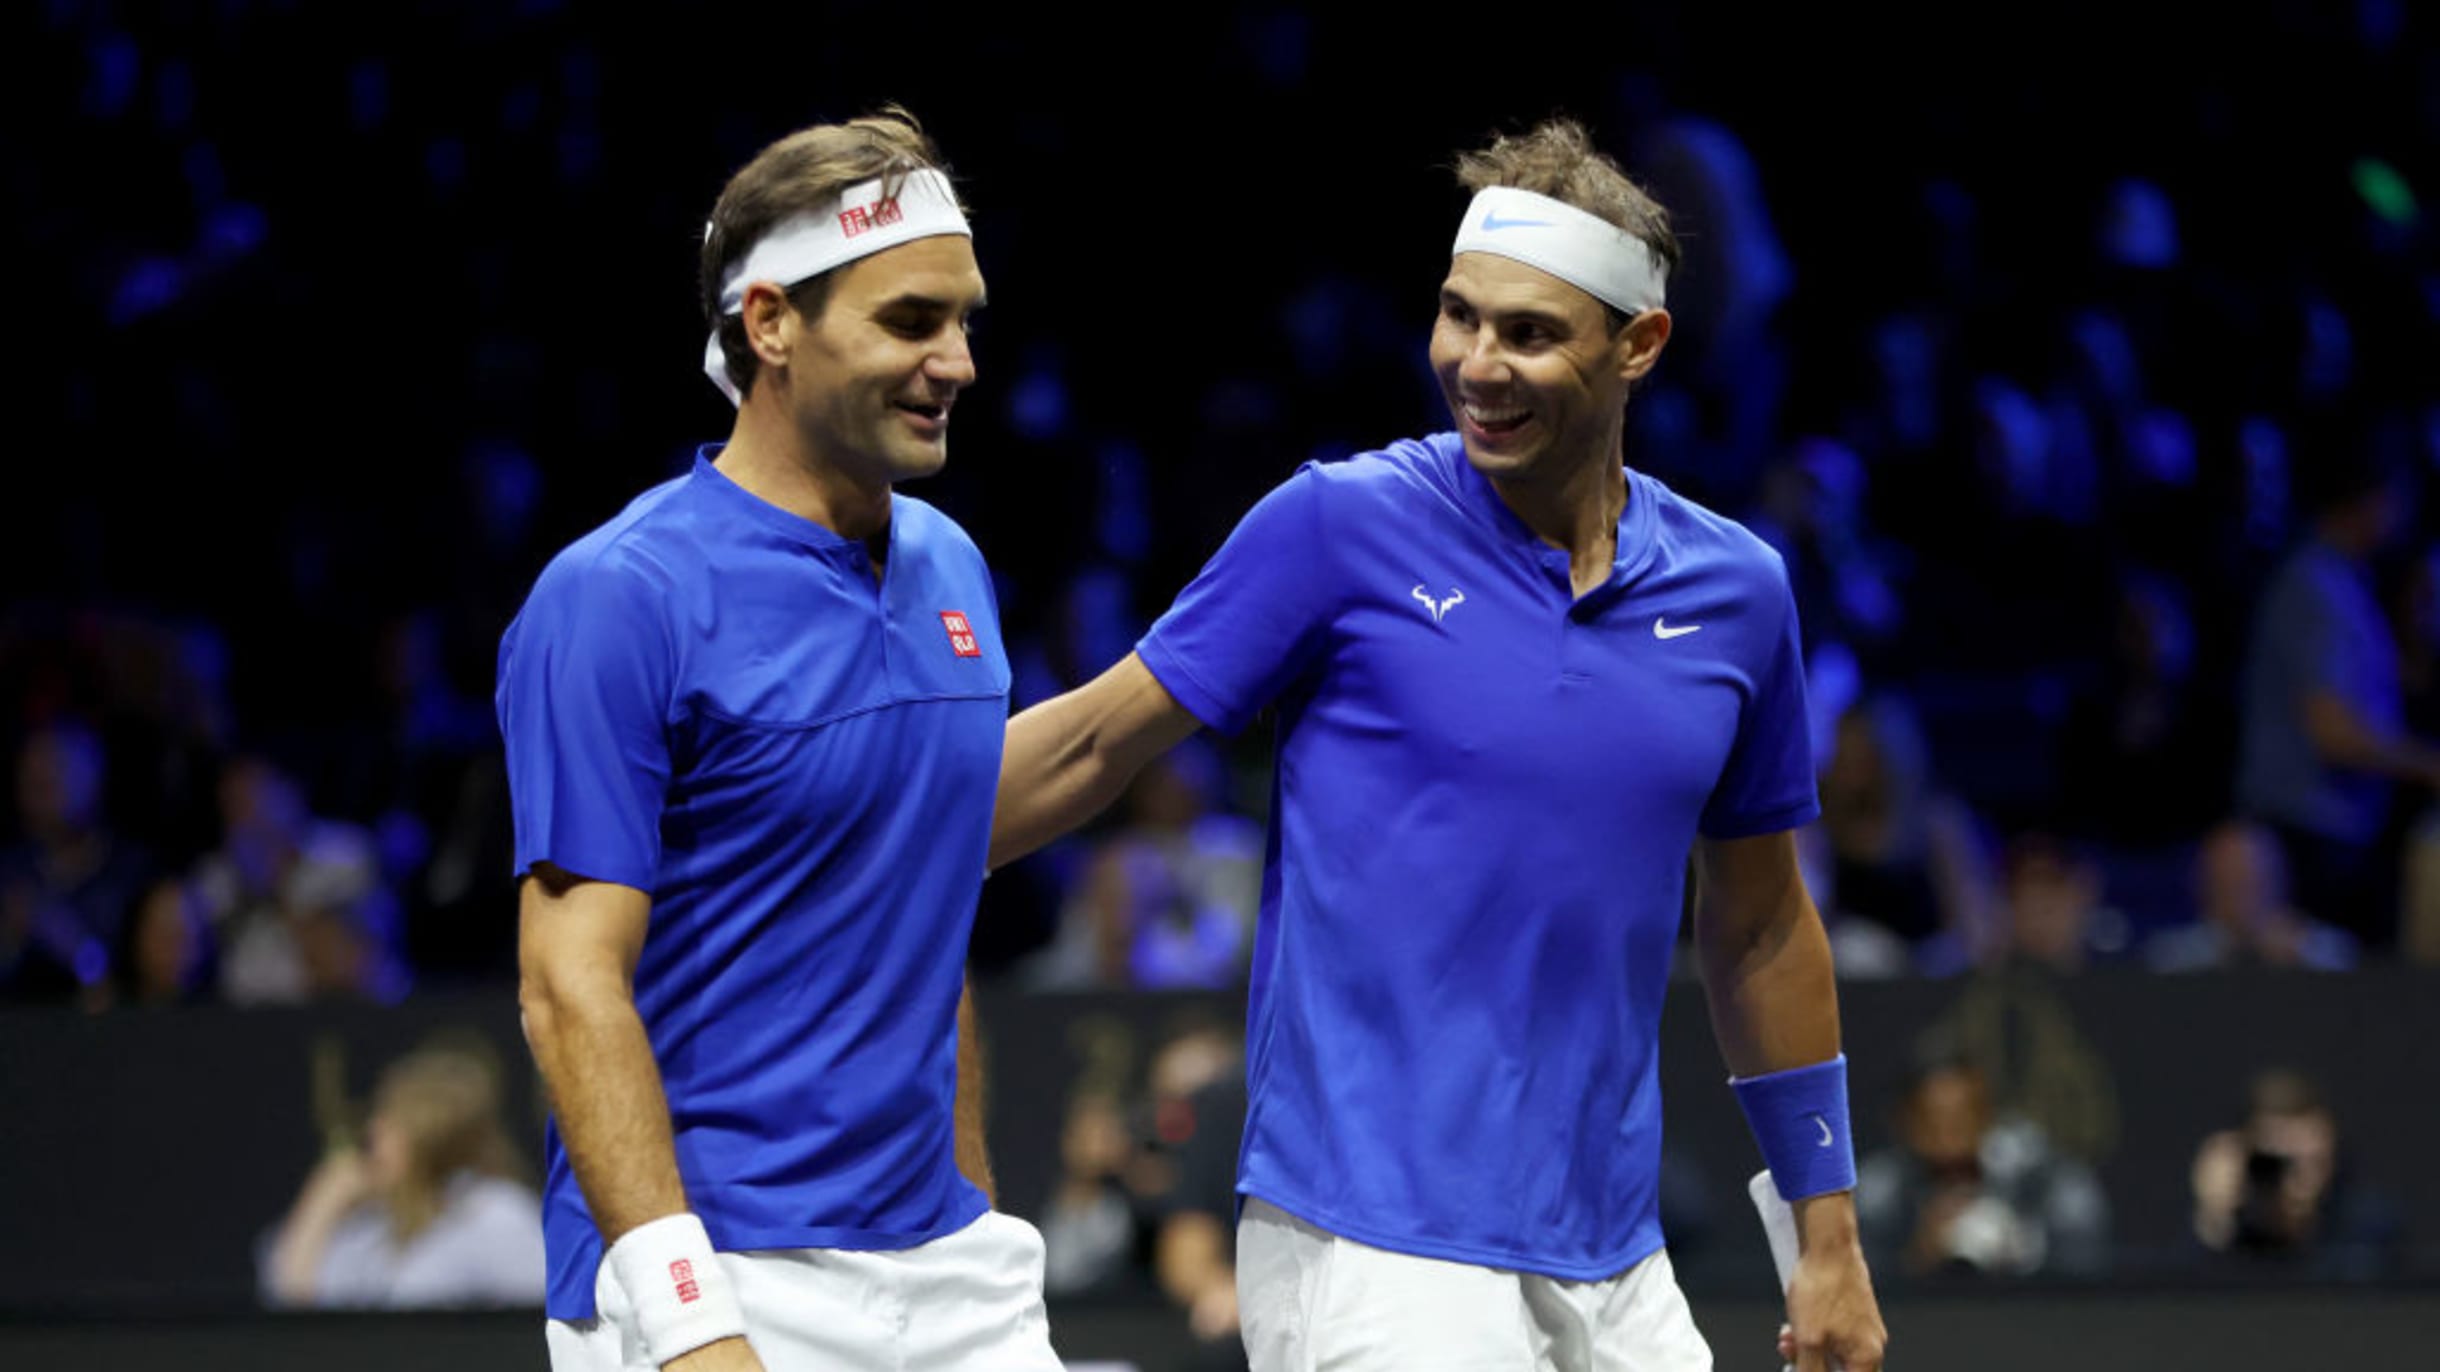 Roger Federer vs Rafael Nadal head-to-head An epic rivalry